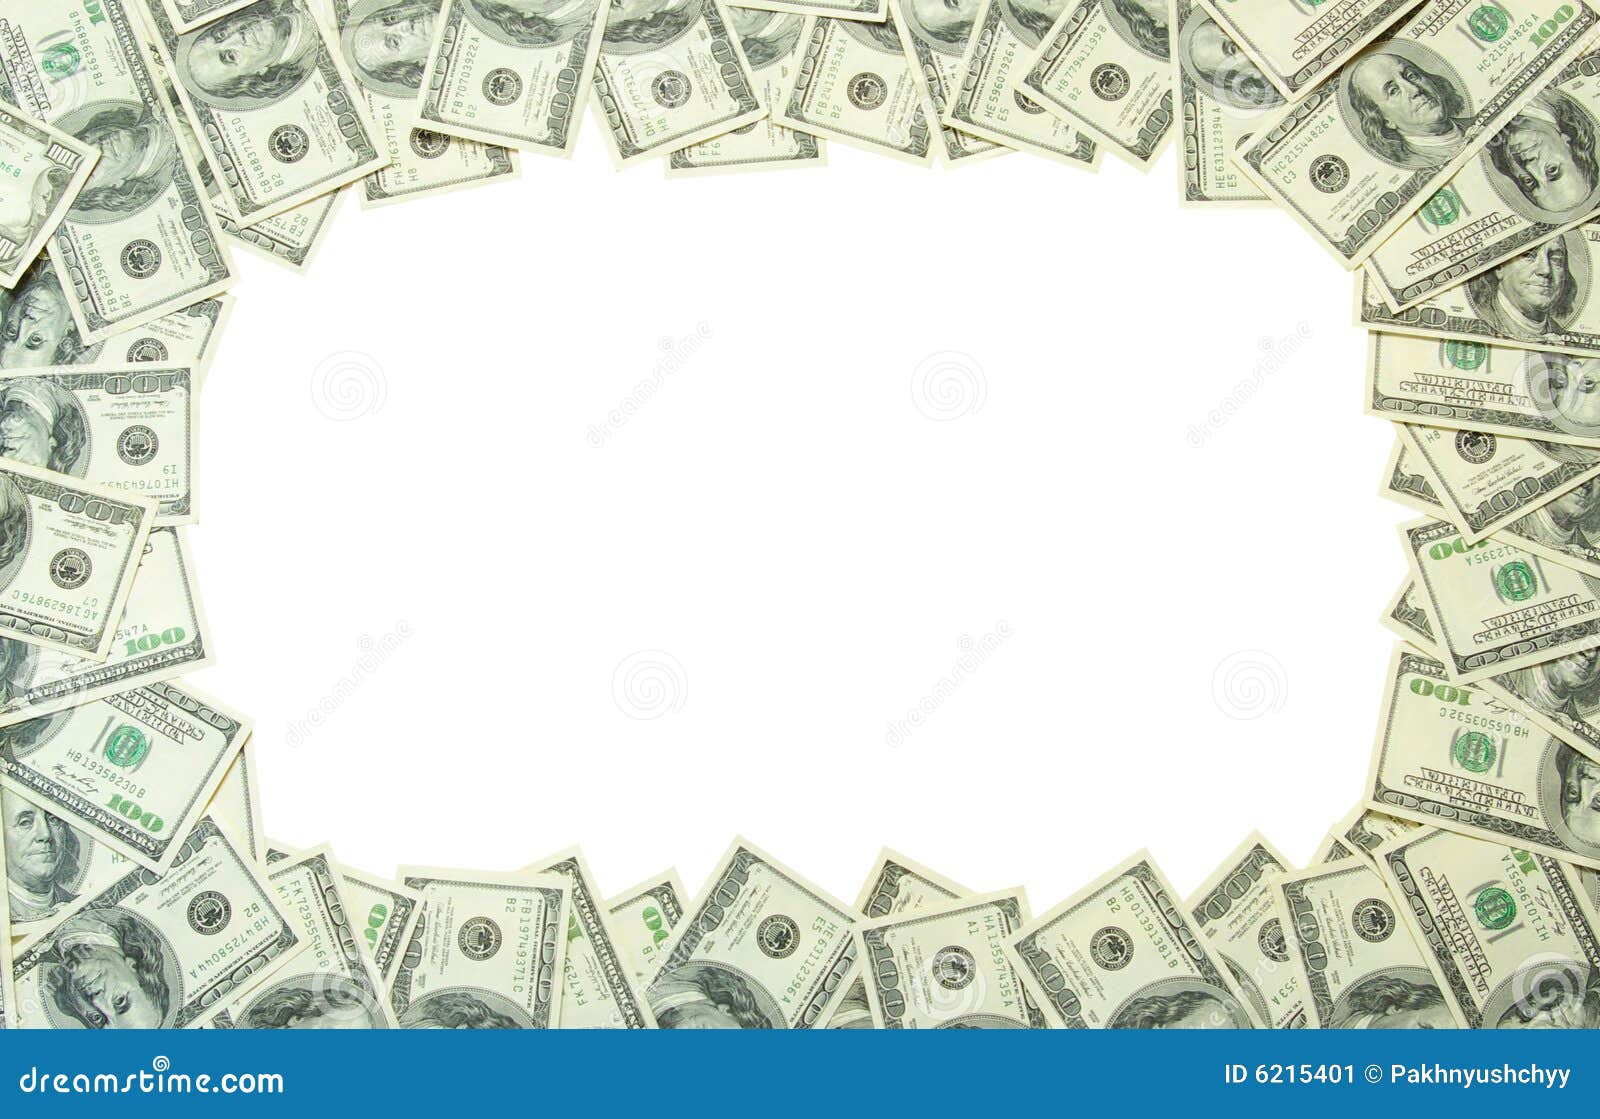 money background clipart - photo #2